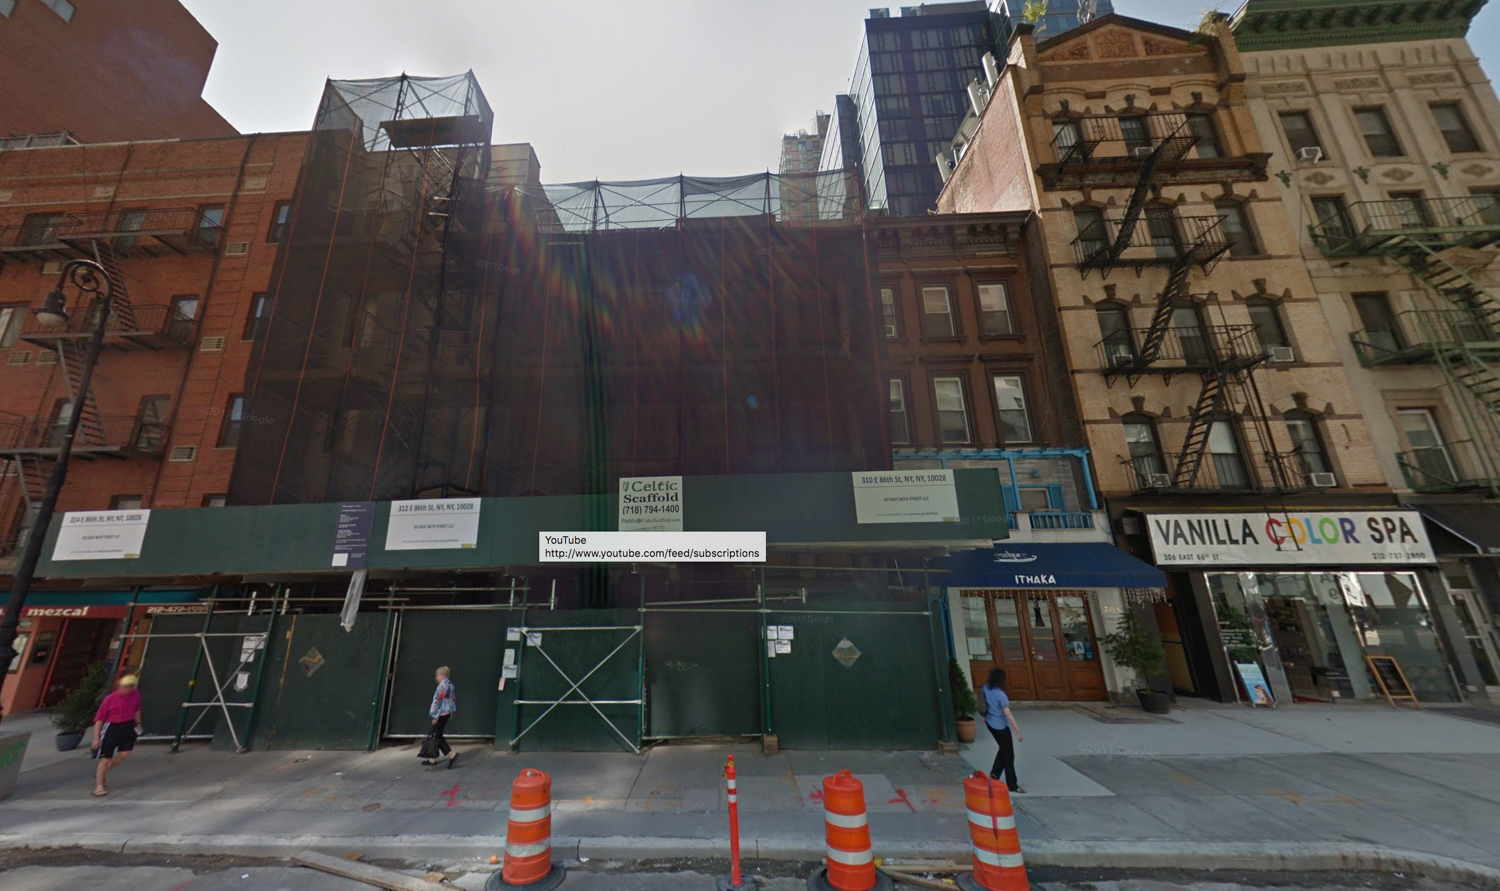 308, 310, 312, and 314 East 86th Street, via Google Maps